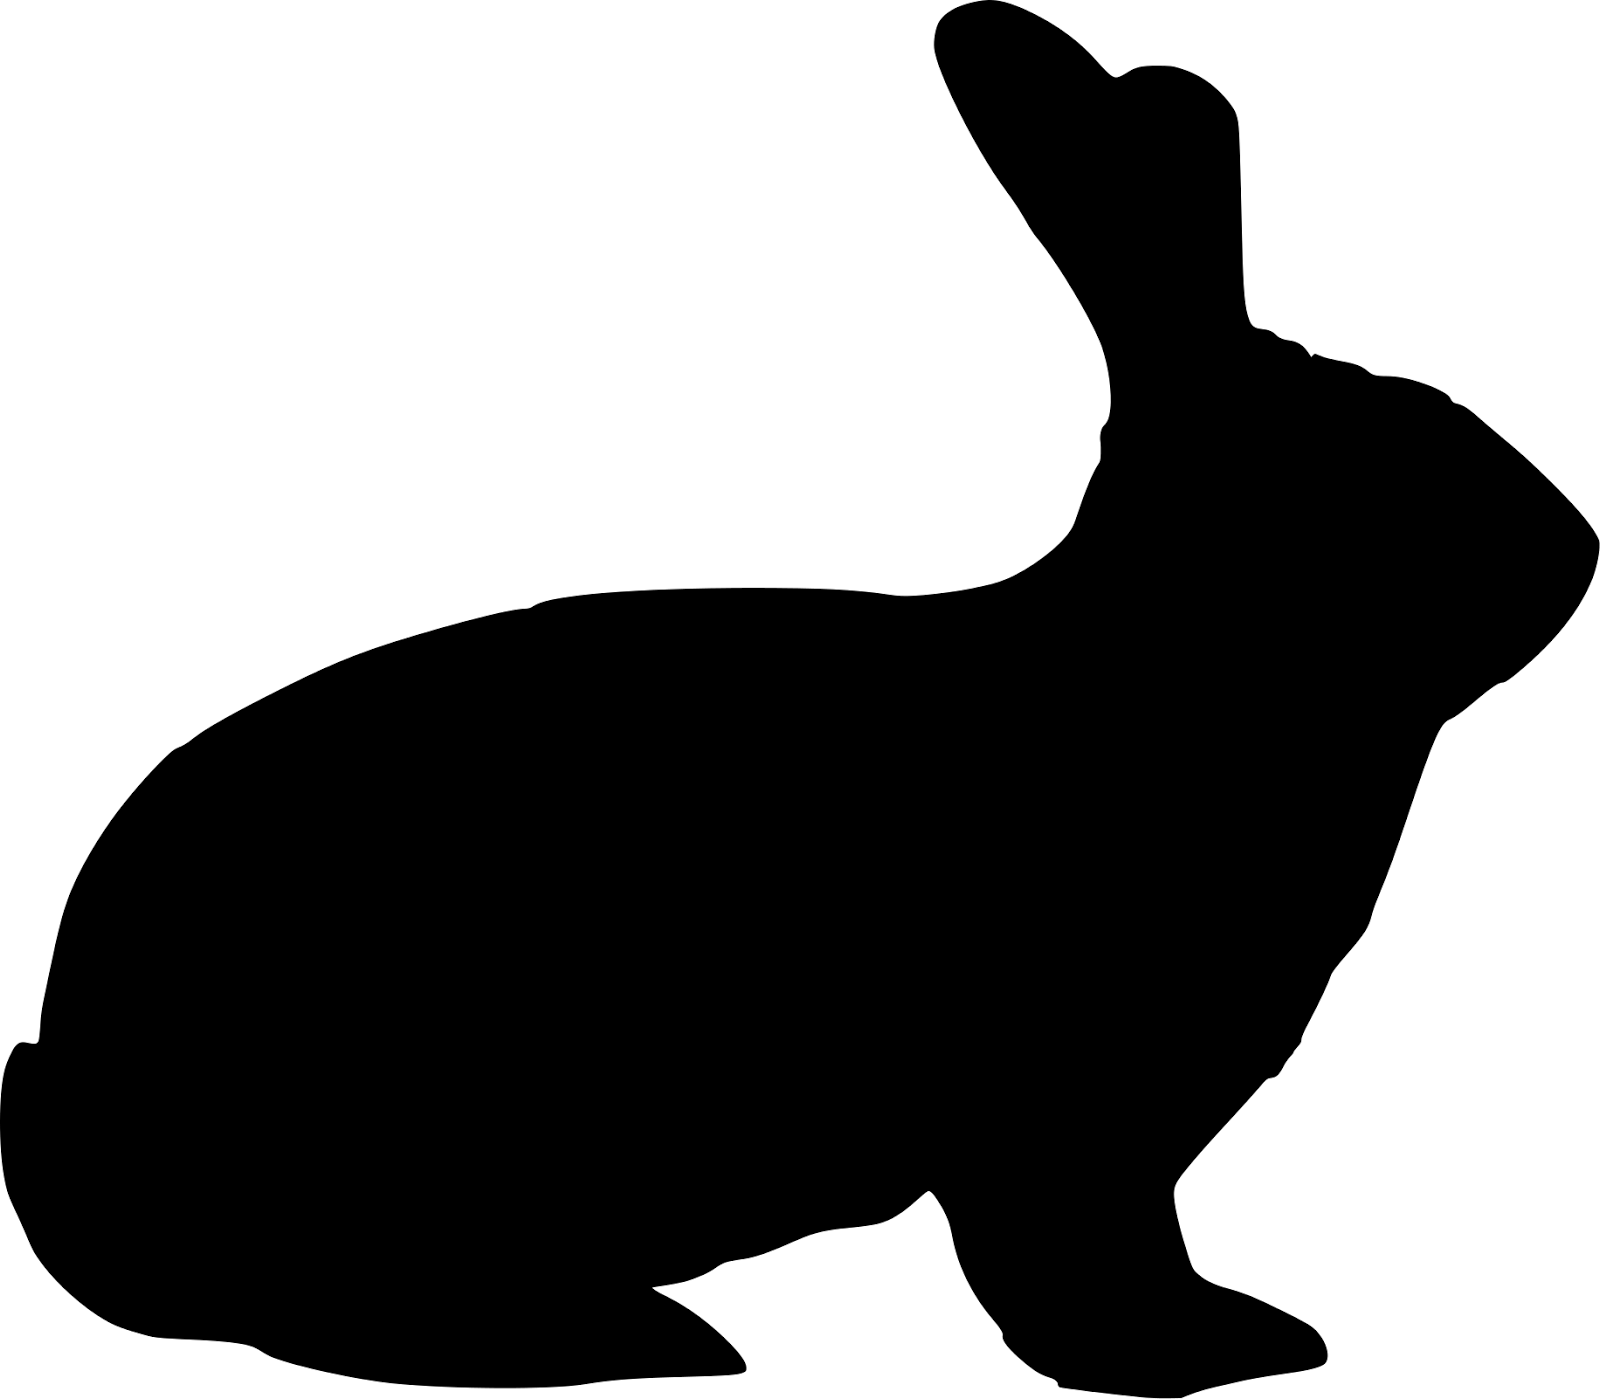 Bunny Silhouette Logo - Free Rabbit Silhouette, Download Free Clip Art, Free Clip Art on ...